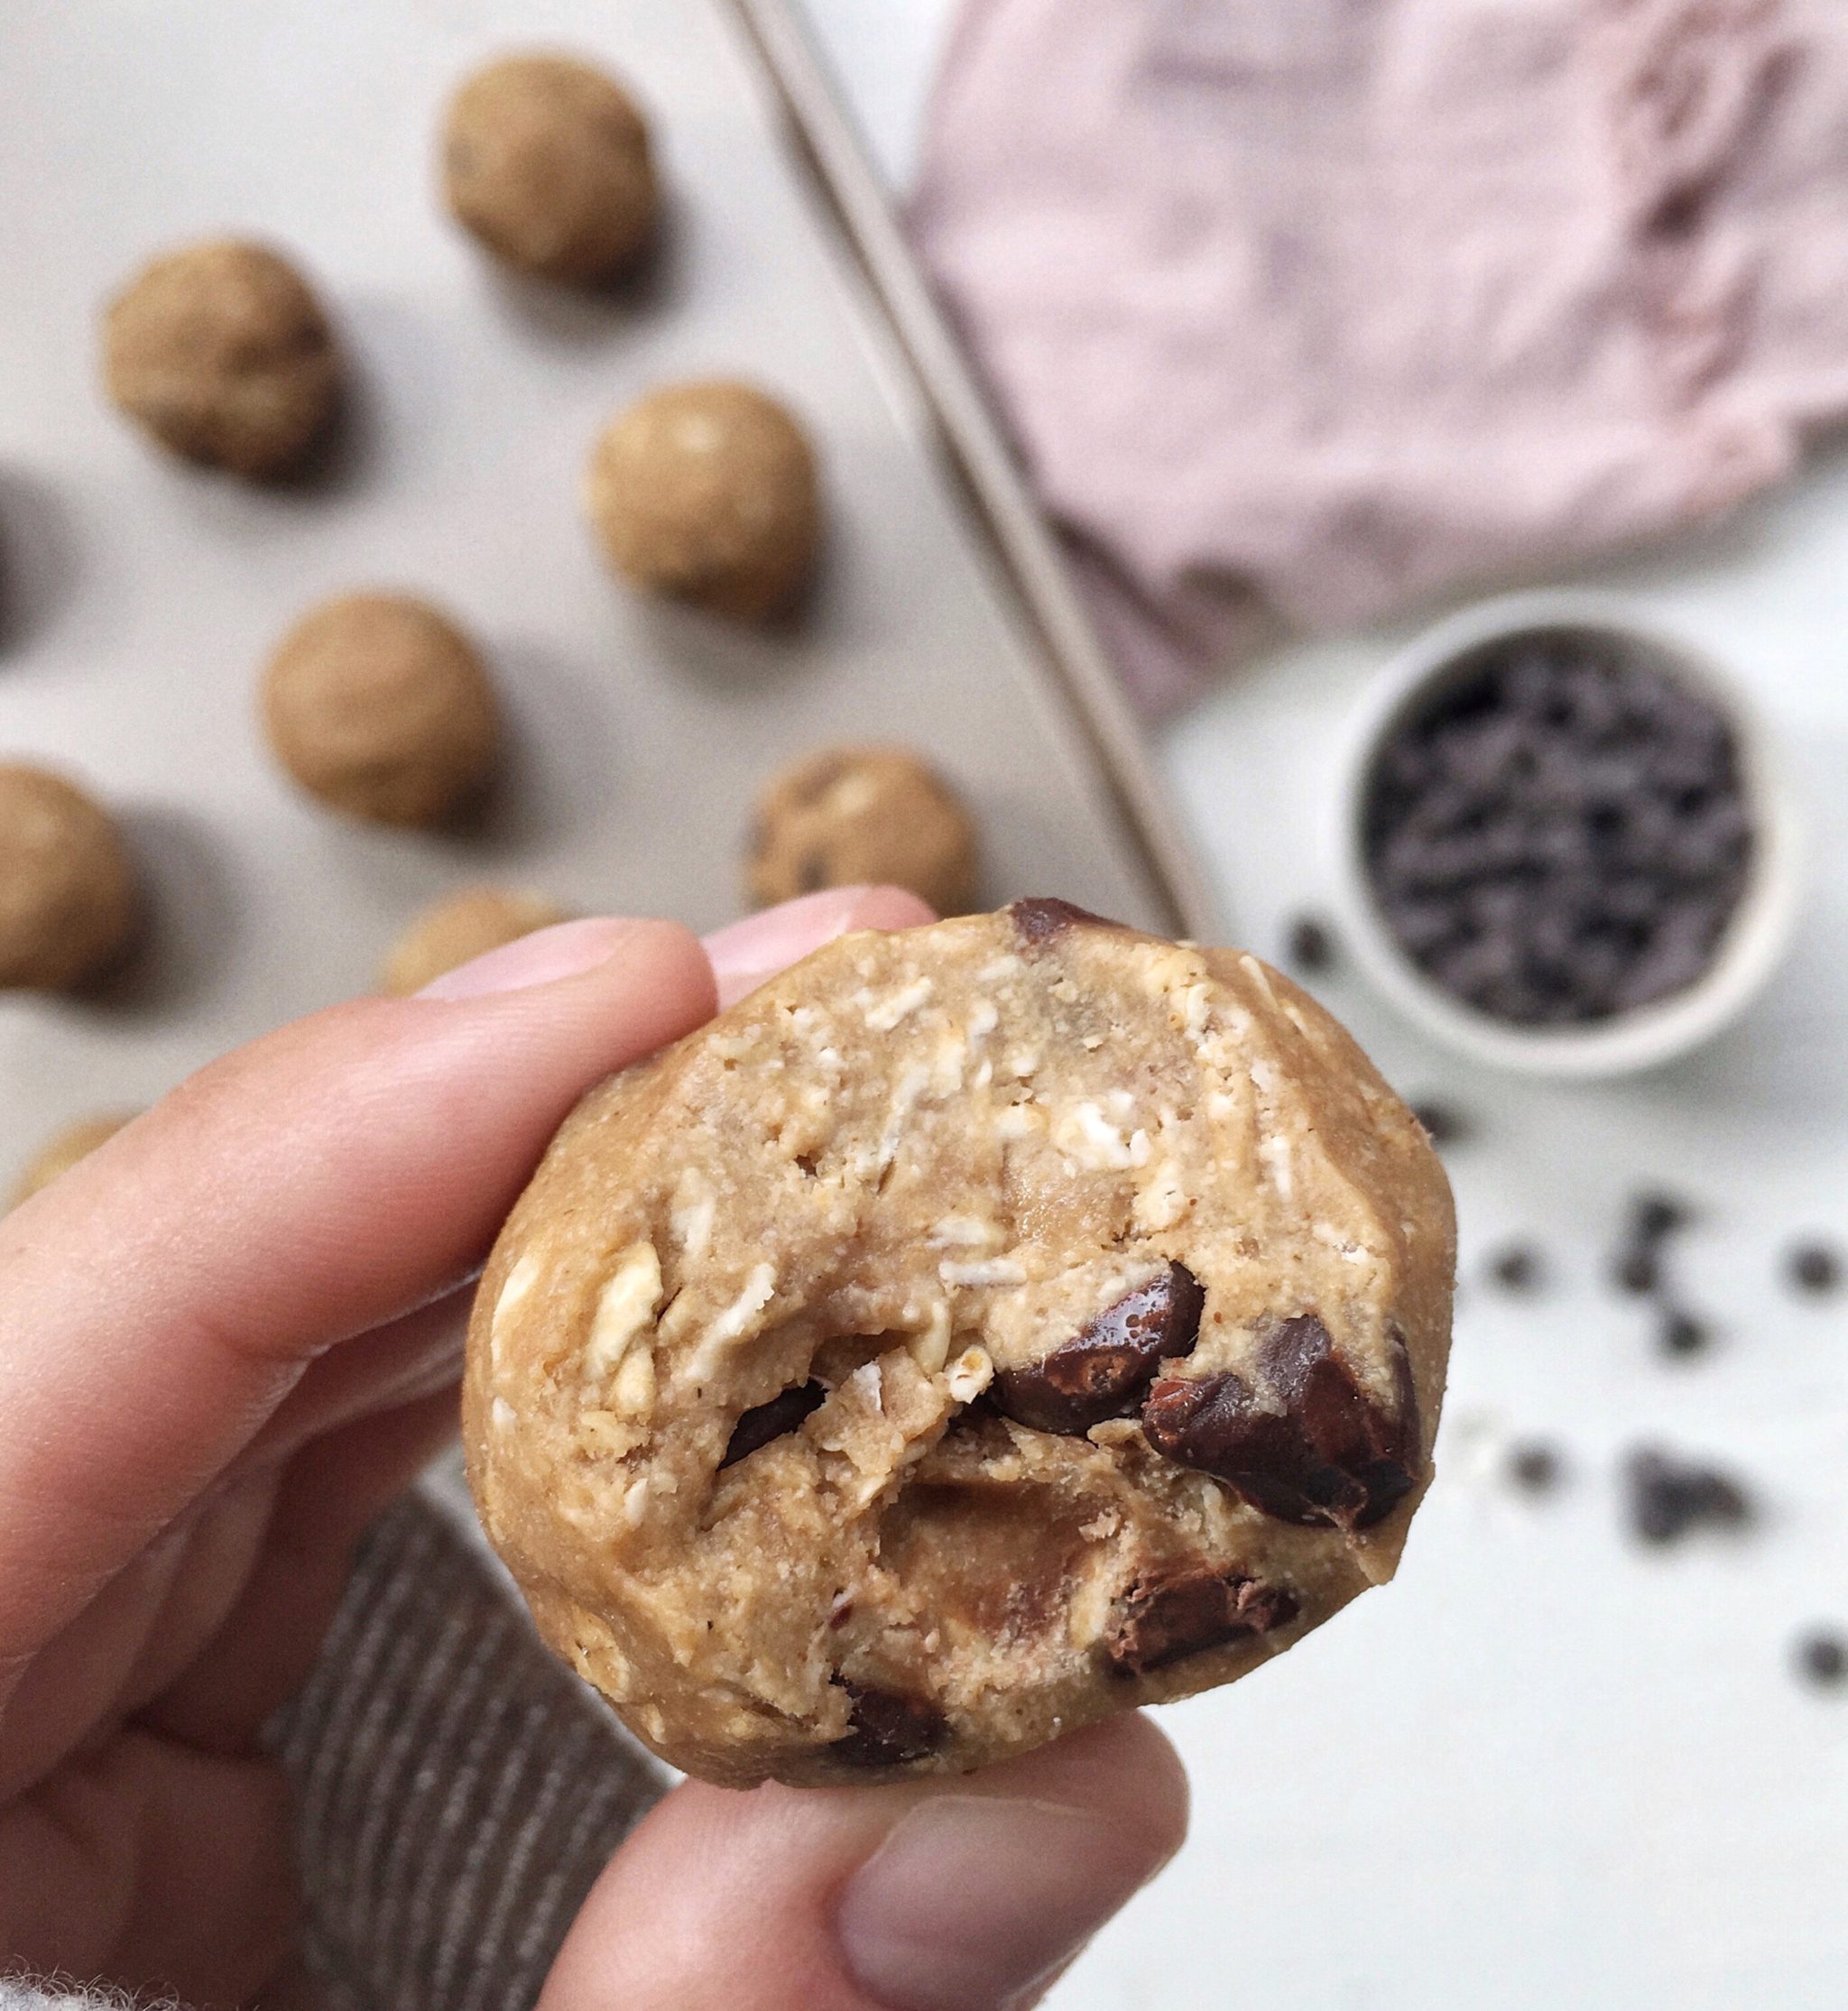 Gluten-Free Cookie Dough Bites Recipe